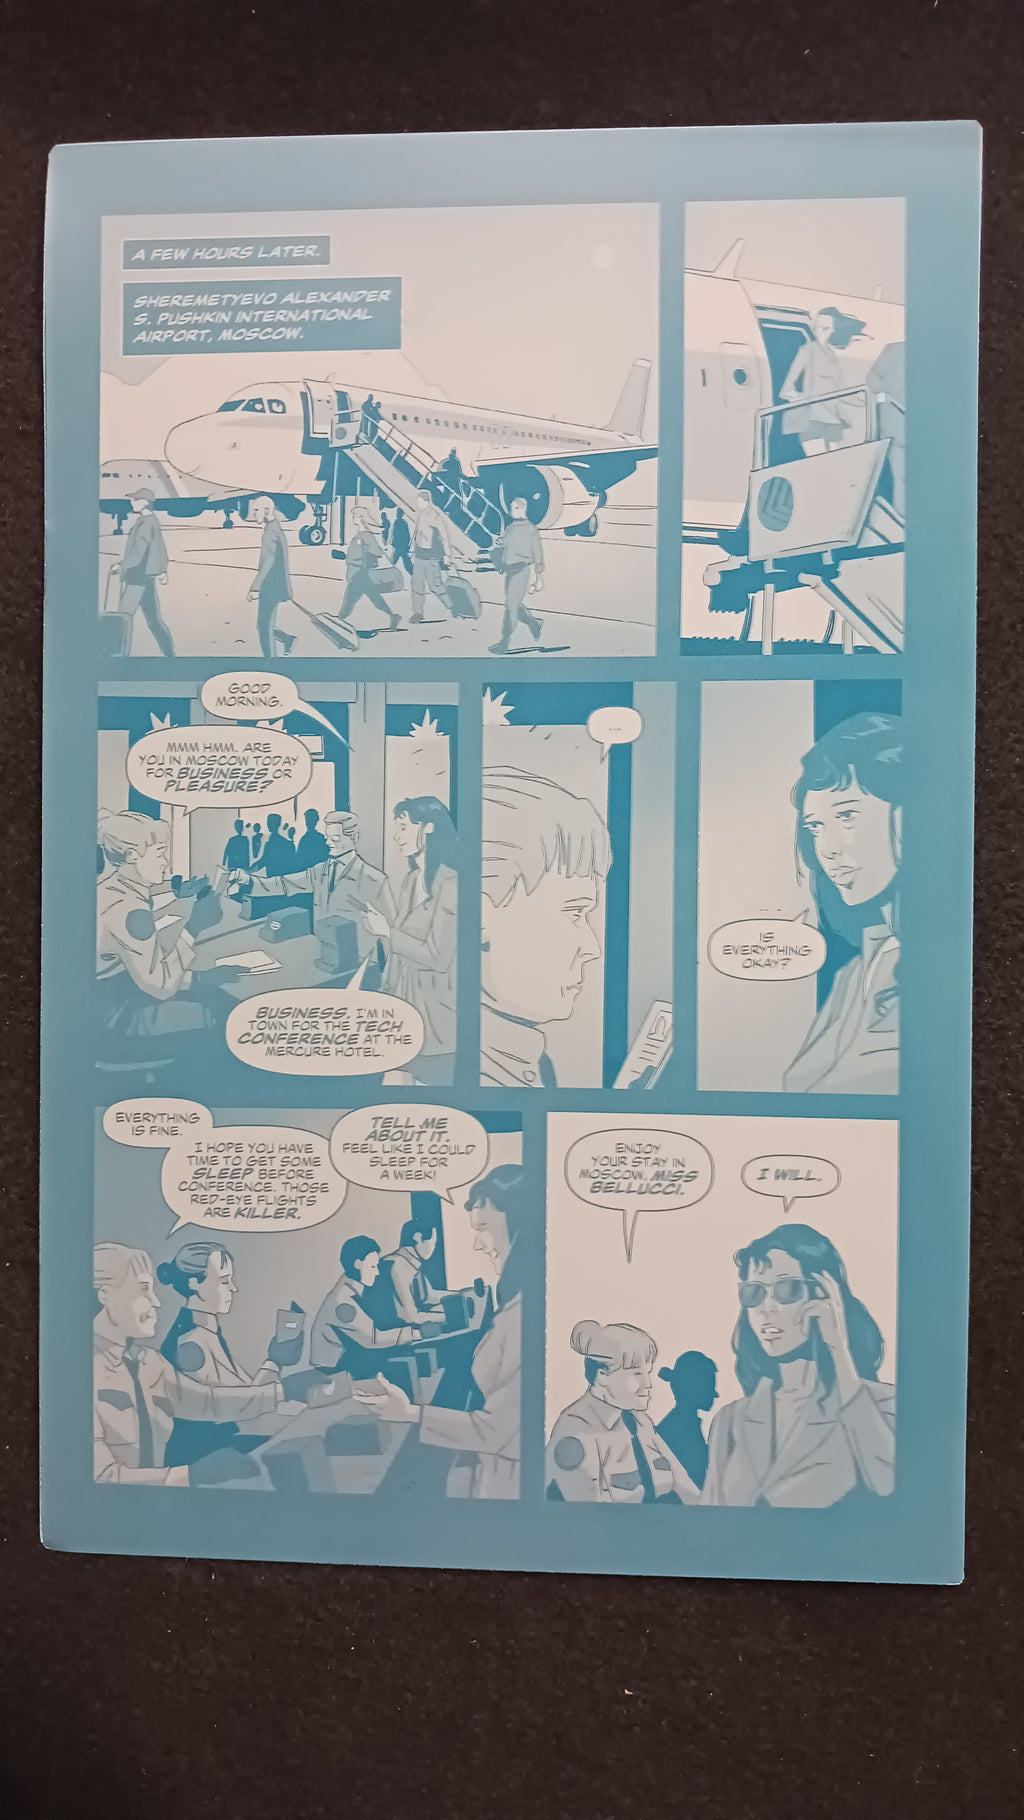 Red Winter Fallout #2 - Page 11 - PRESSWORKS - Comic Art - Printer Plate - Cyan